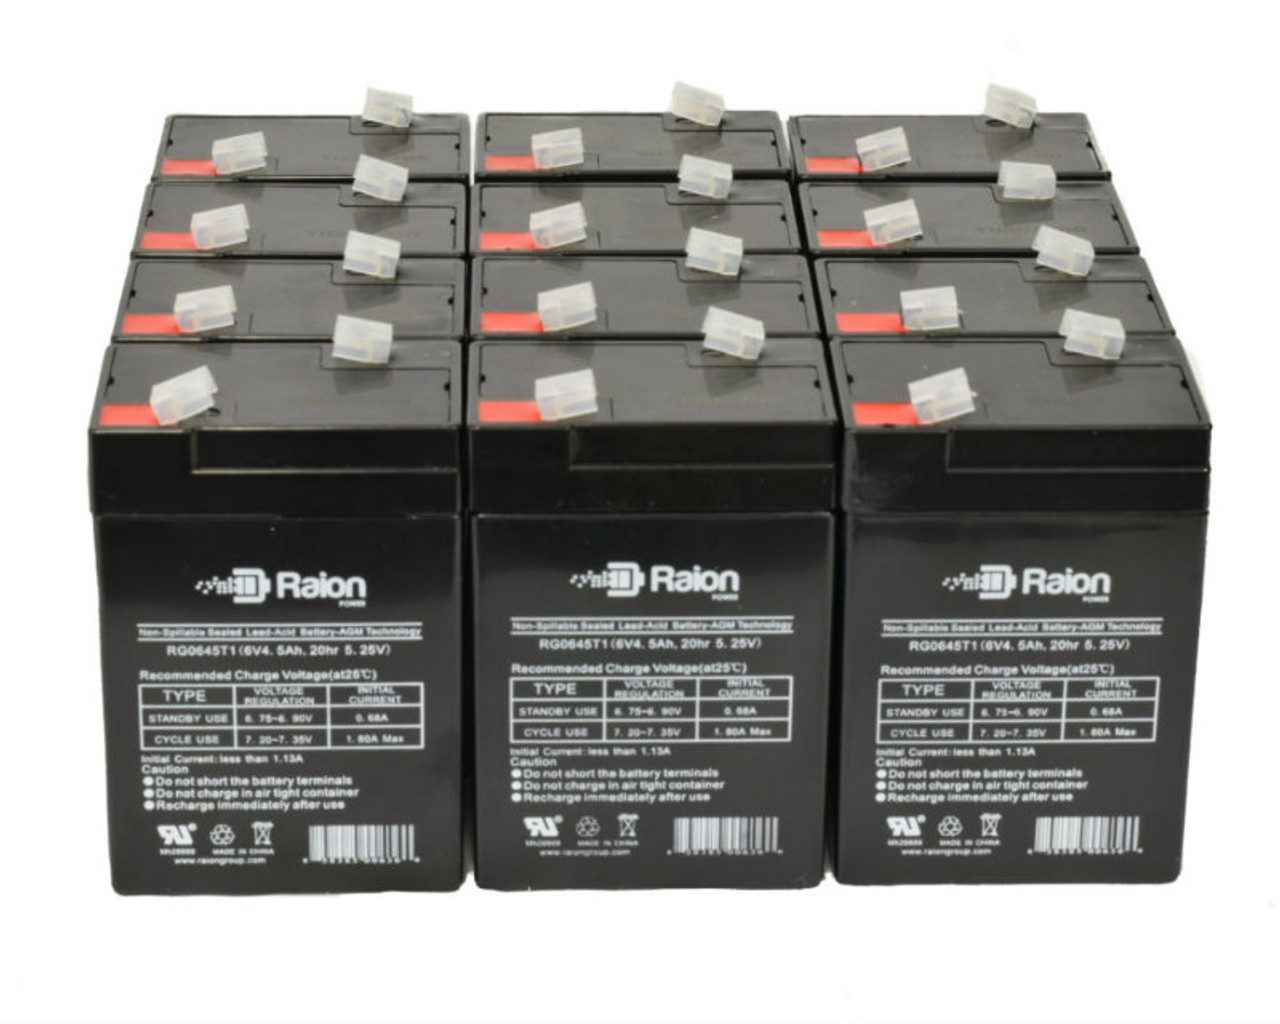 Raion Power 6V 4.5Ah Replacement Emergency Light Battery for Sentry Lite SCR-525-11 - 12 Pack